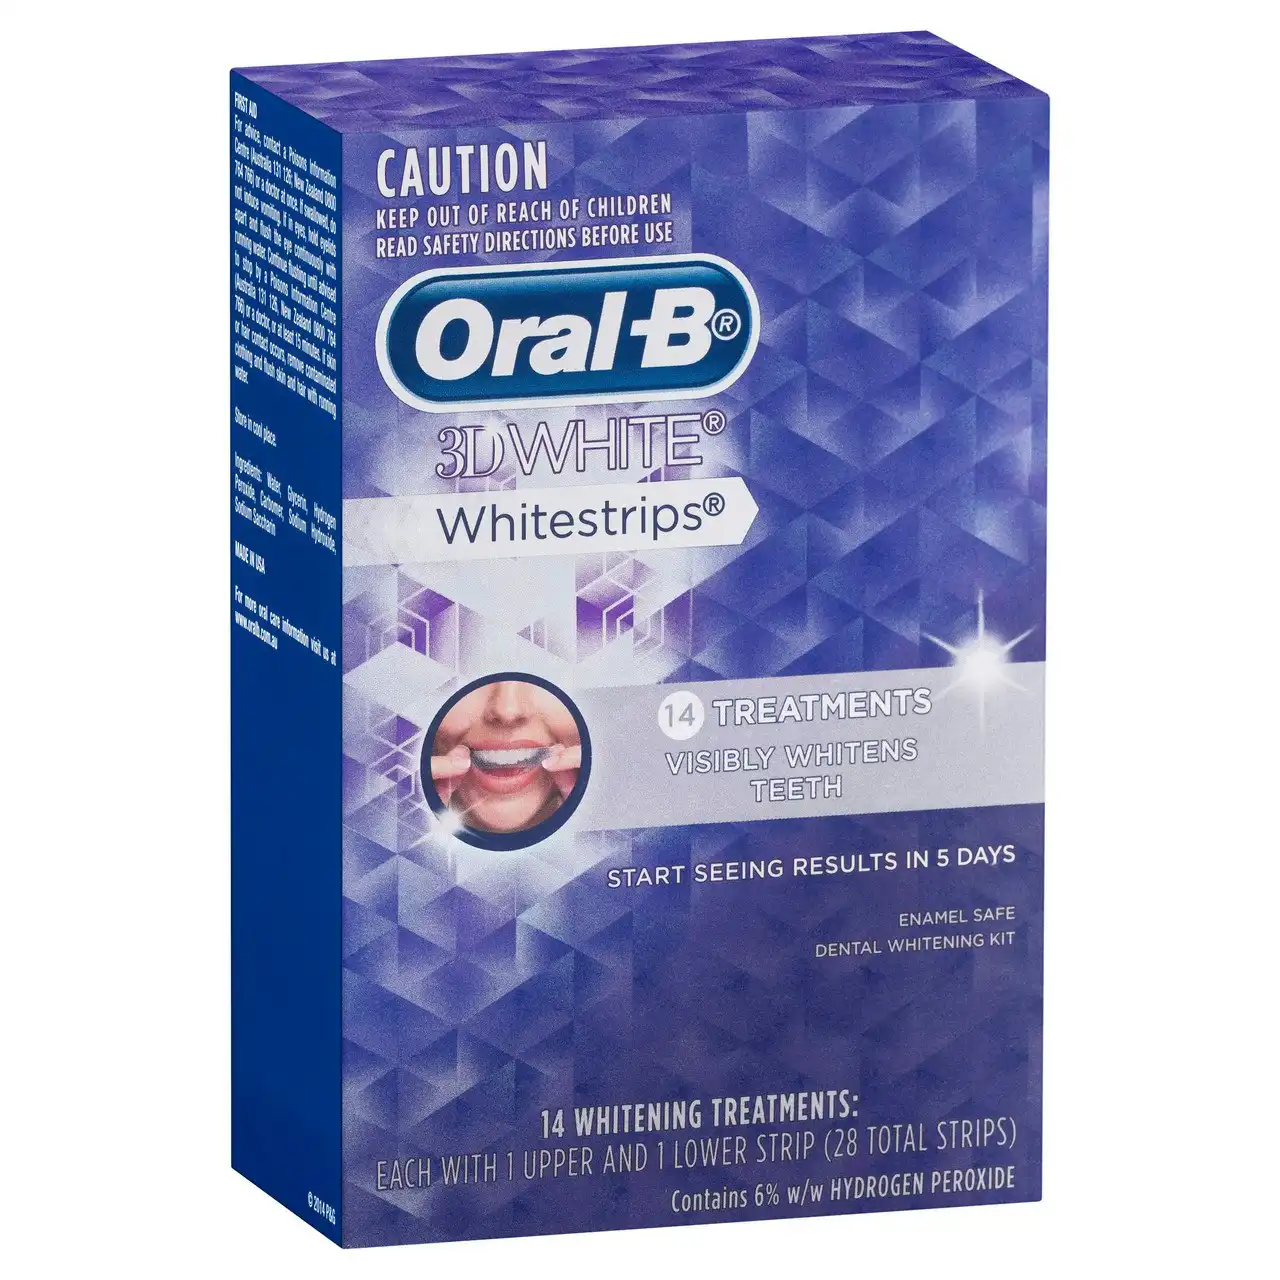 Oral-B 3D White Whitestrips 14 Treatments